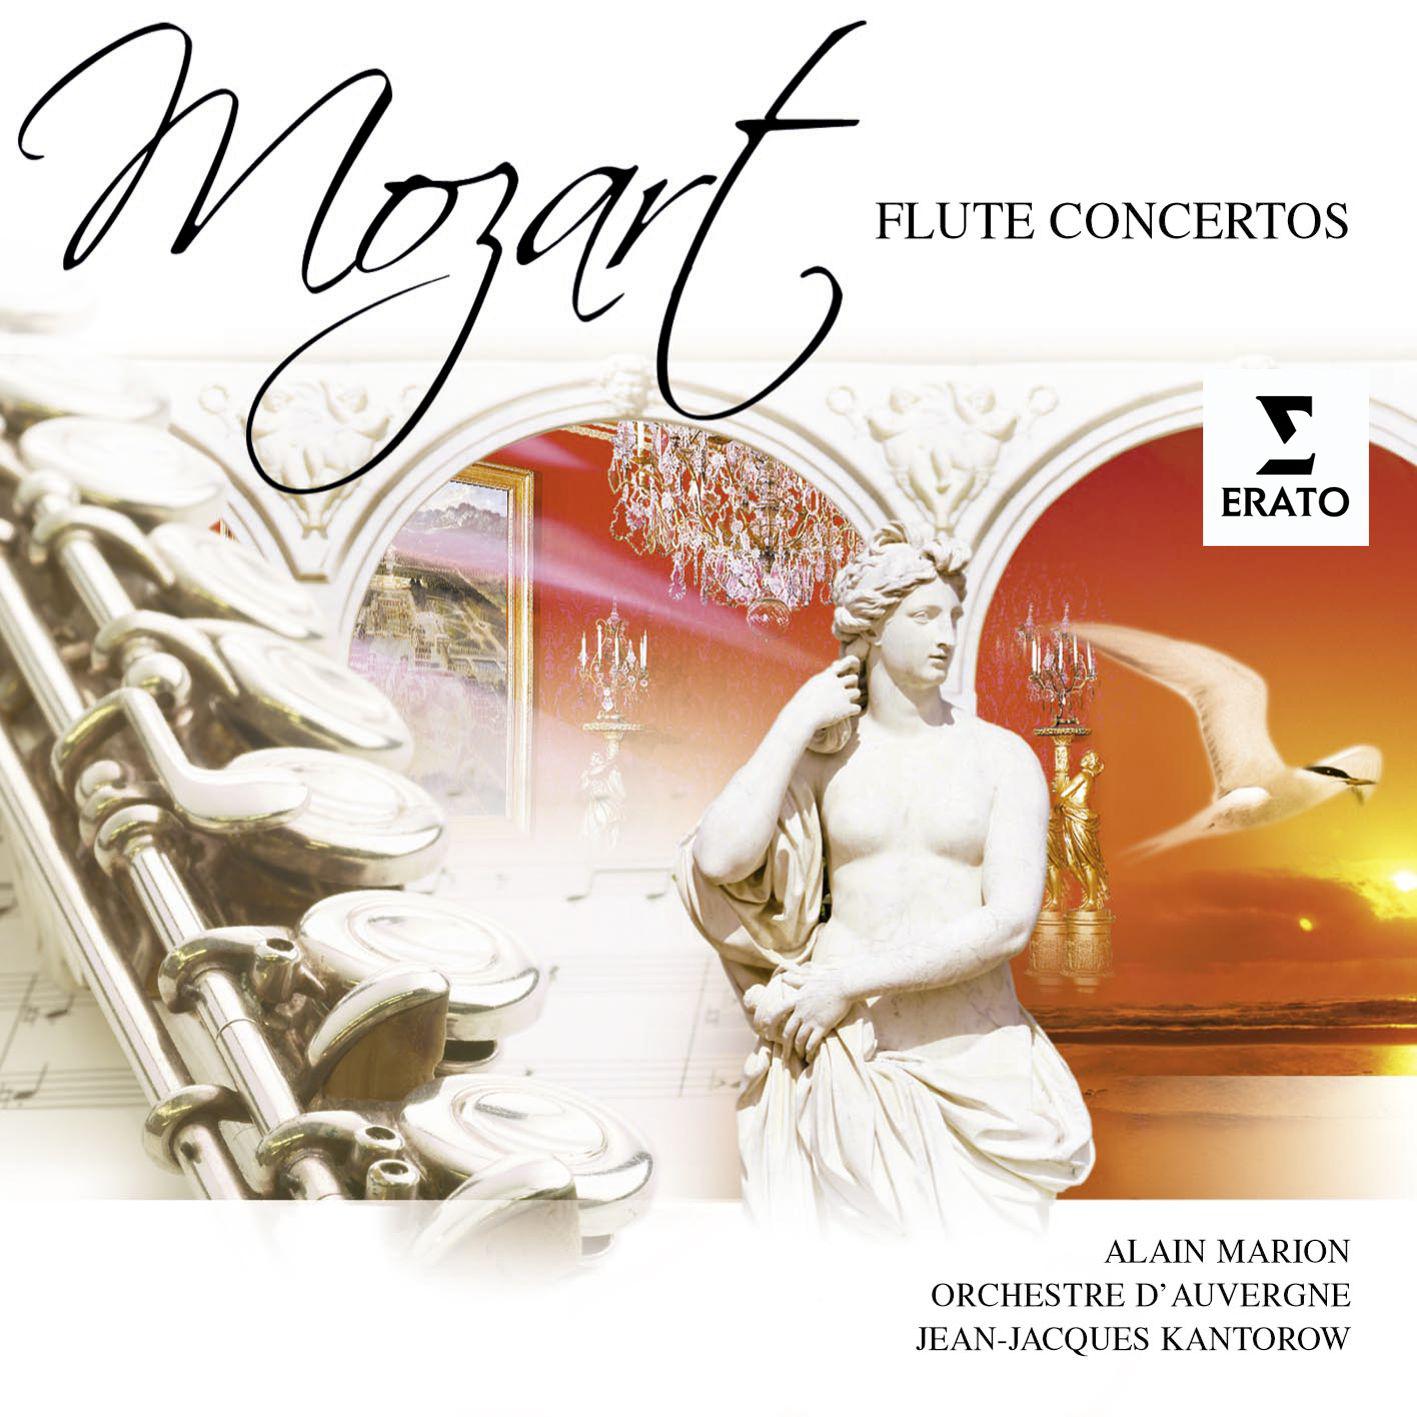 Flute Concerto No. 2 in D K314/285d: I. Allegro aperto